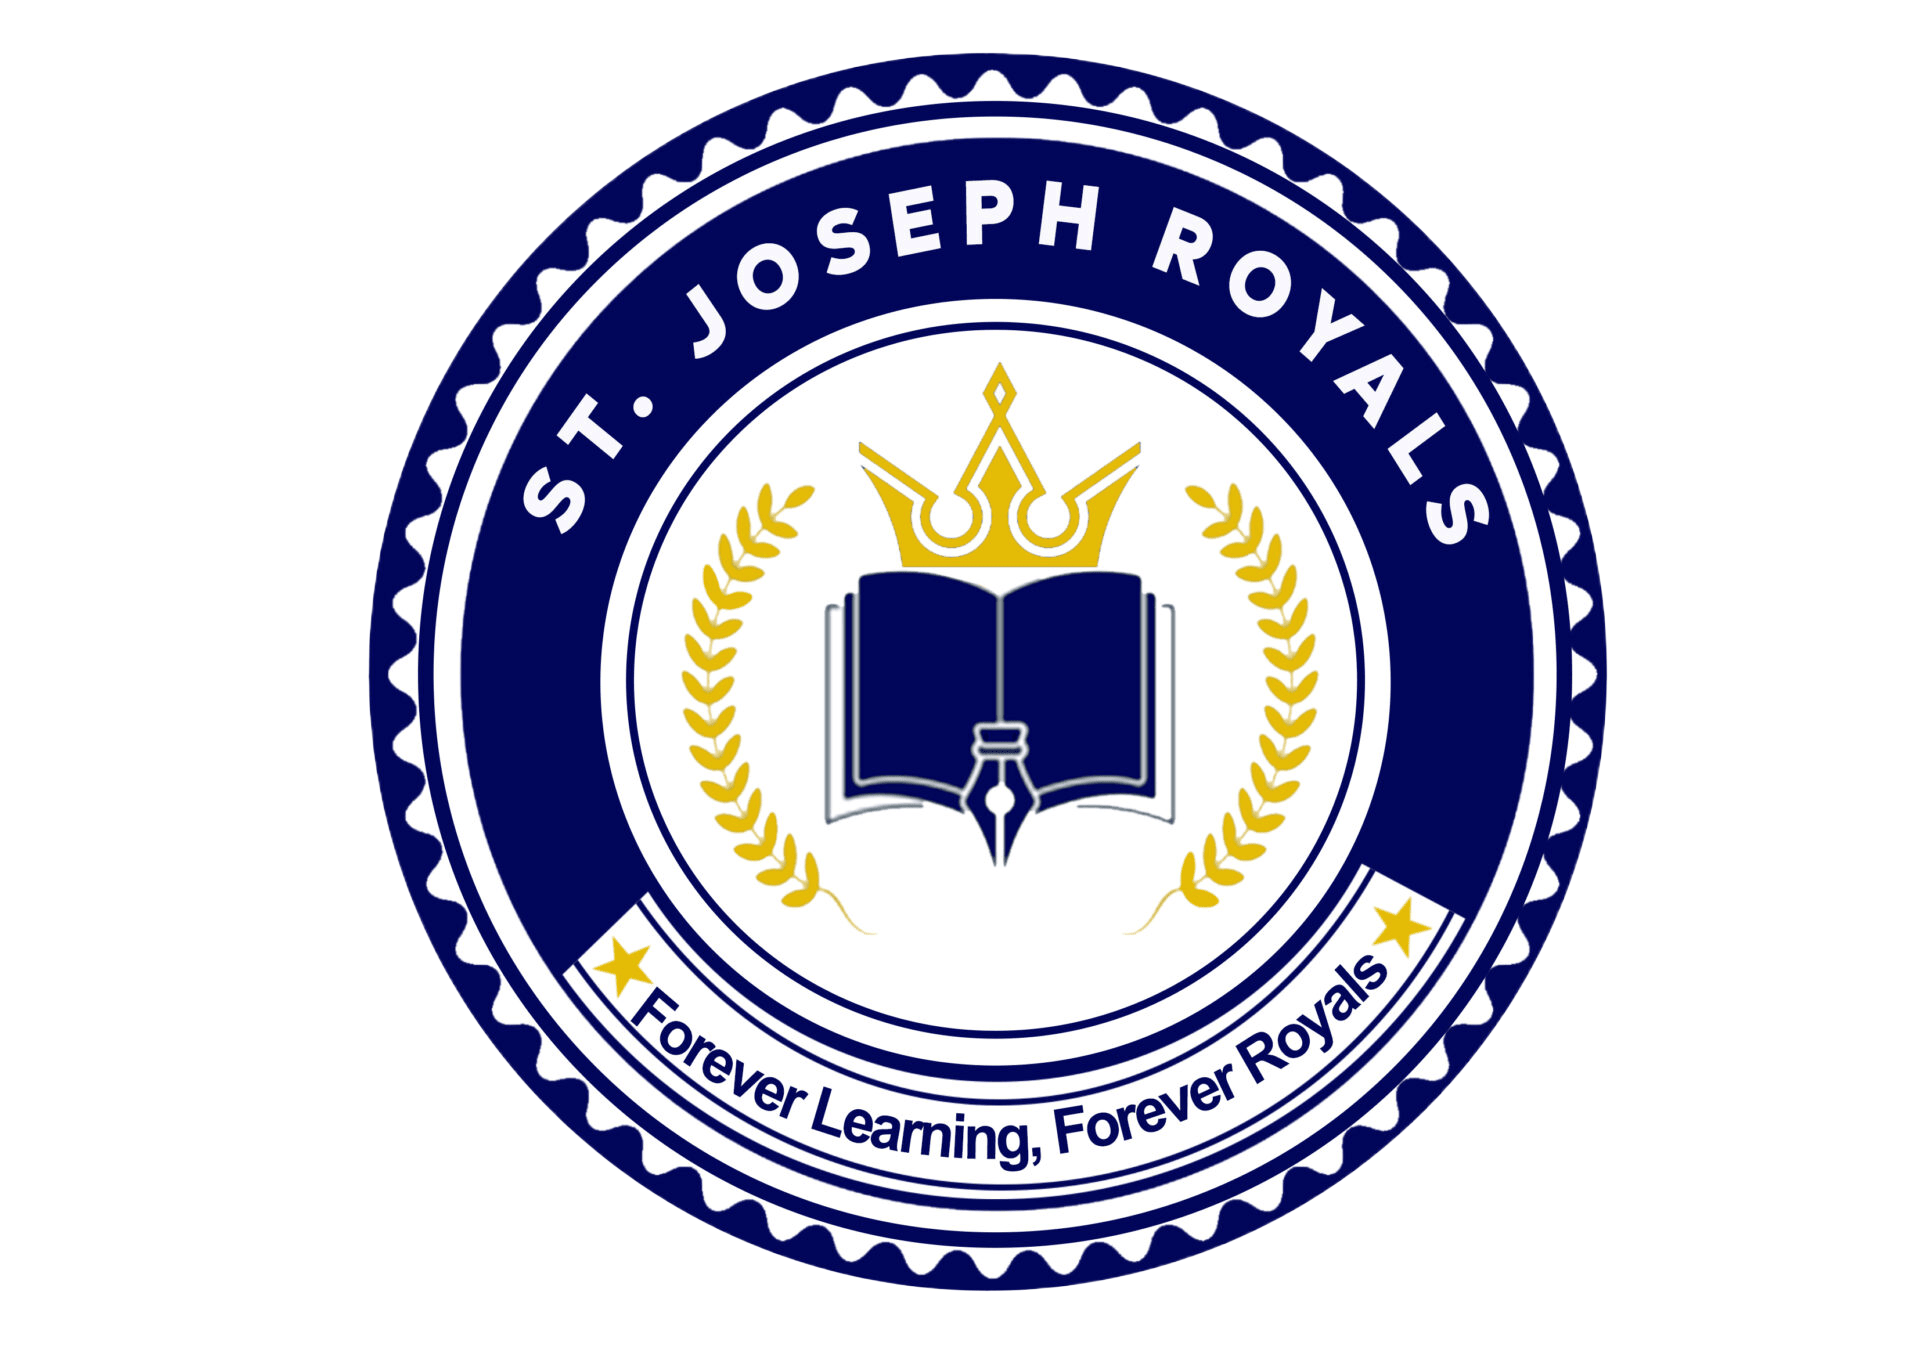 St. Joseph Royals